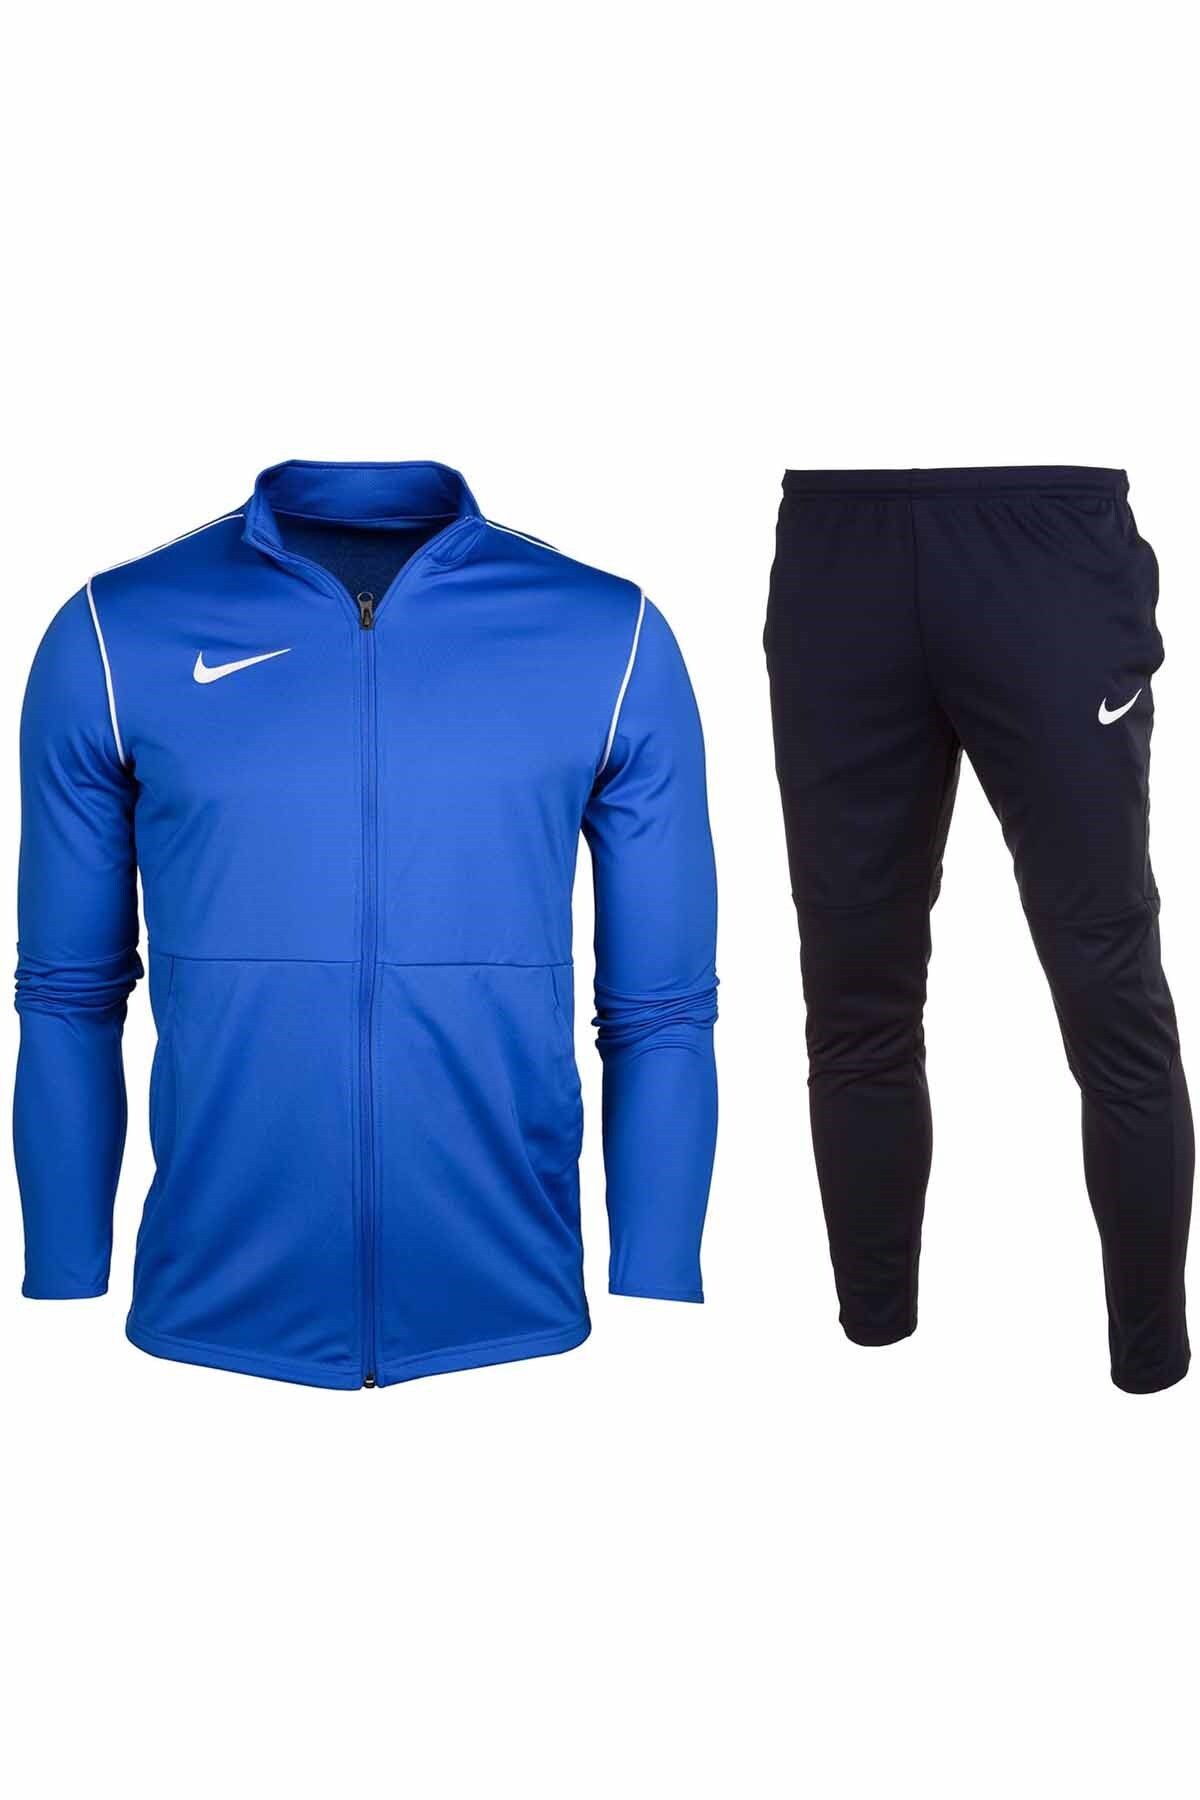 Nike Dry Park 20 B1 Erkek Eşofman Takım Nk6885-463-mavi